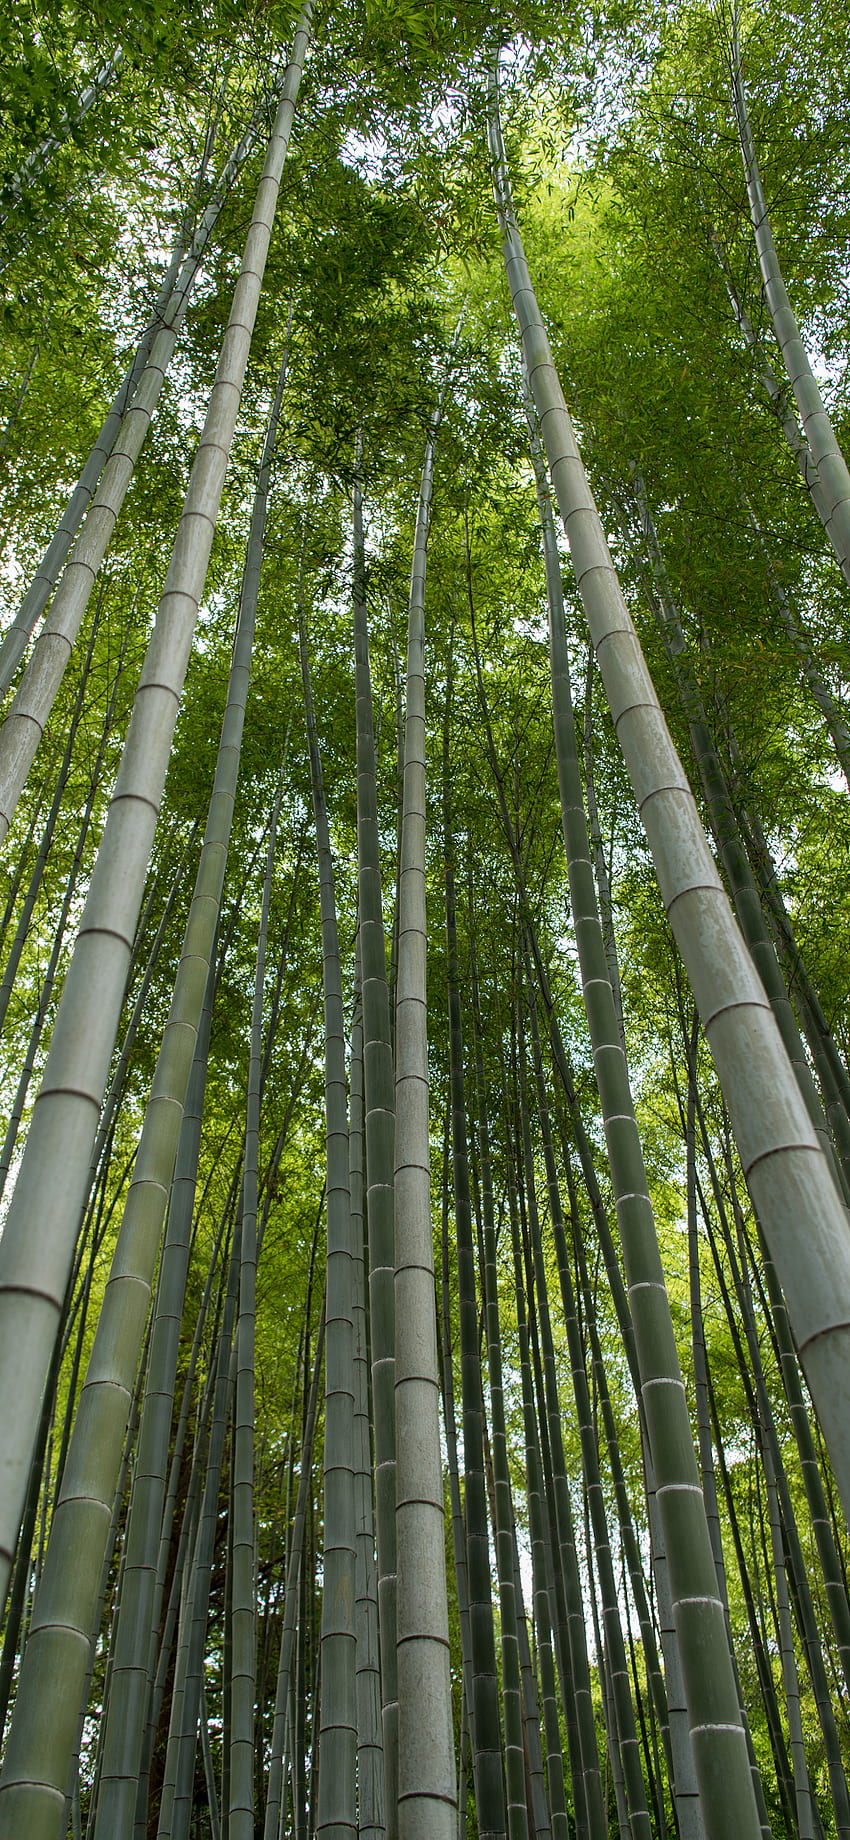 Bamboo 4k Wallpaper by RoulettesPlay on DeviantArt